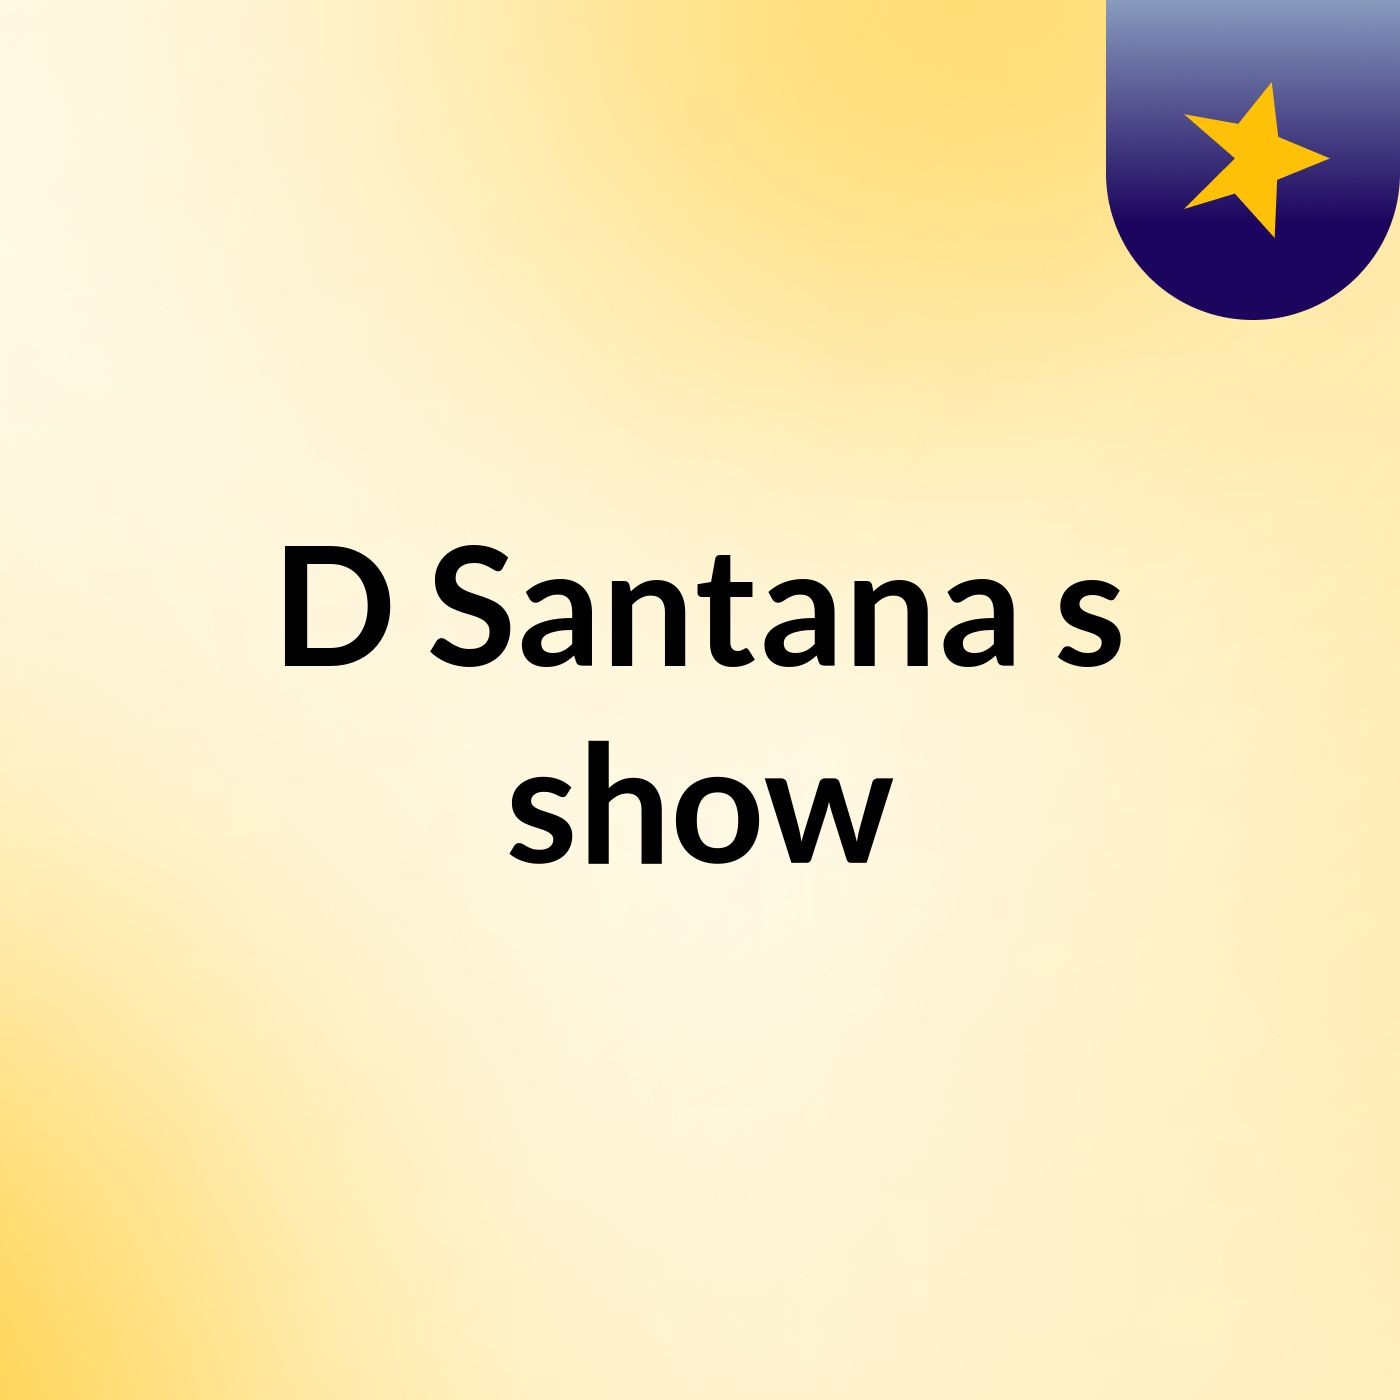 D Santana's show